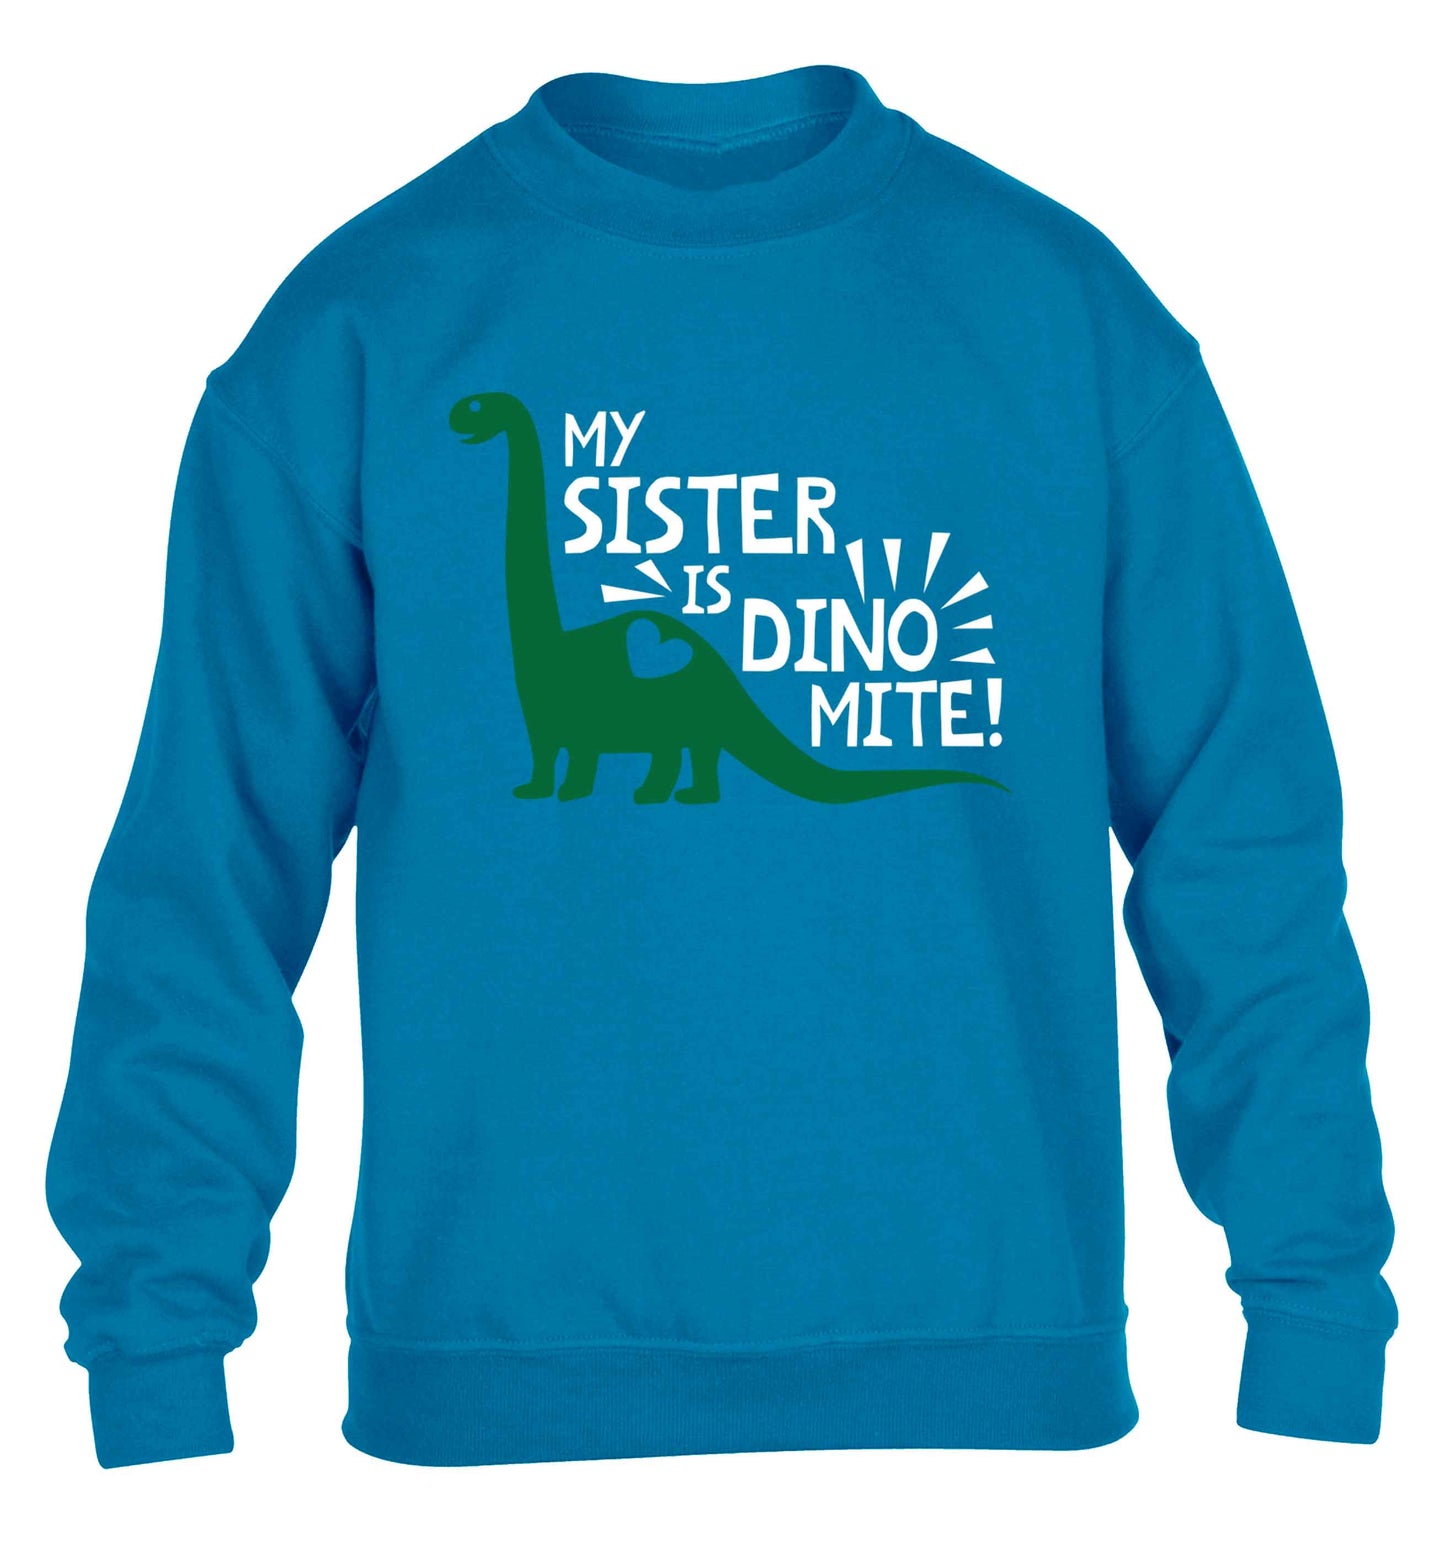 My sister is dinomite! children's blue sweater 12-13 Years